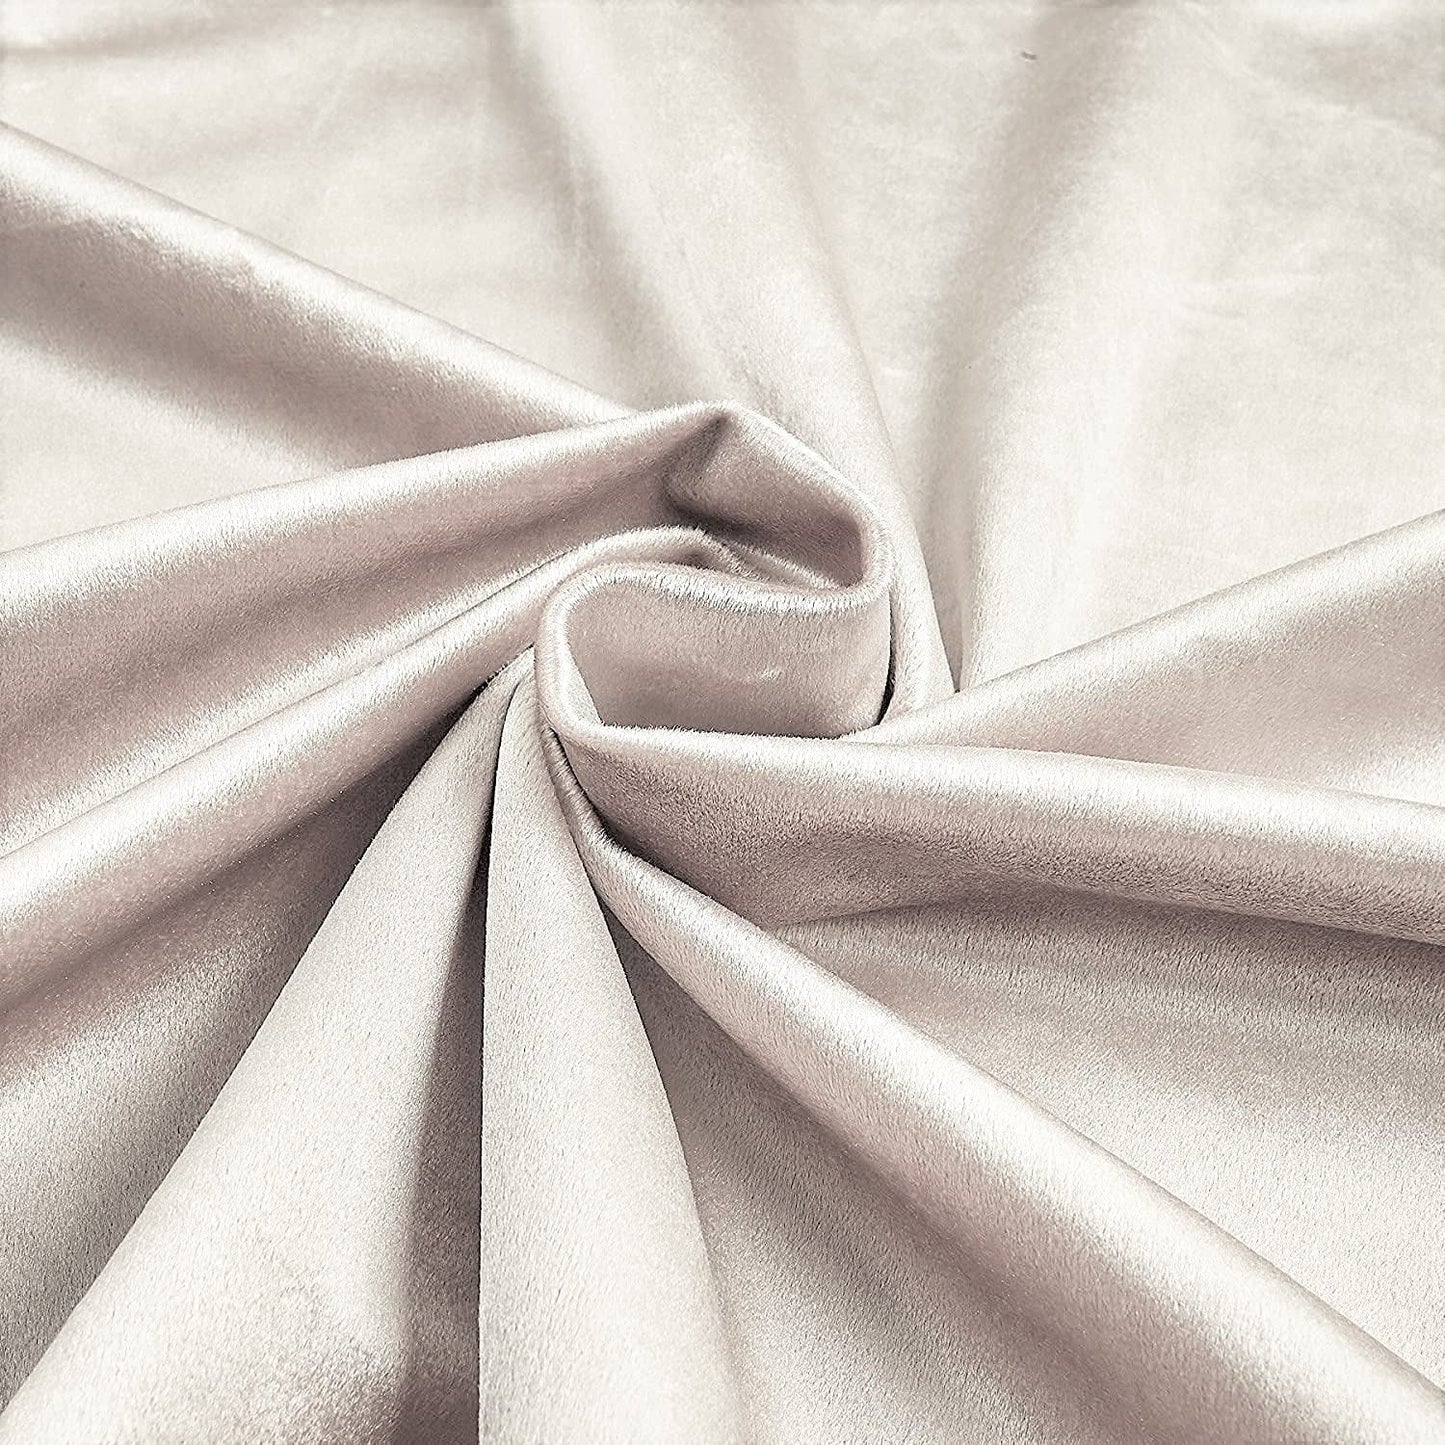 Upholstery Royal Velvet Fabric, 100% Polyester Upholstery Fabric (1 Yard, Champagne)